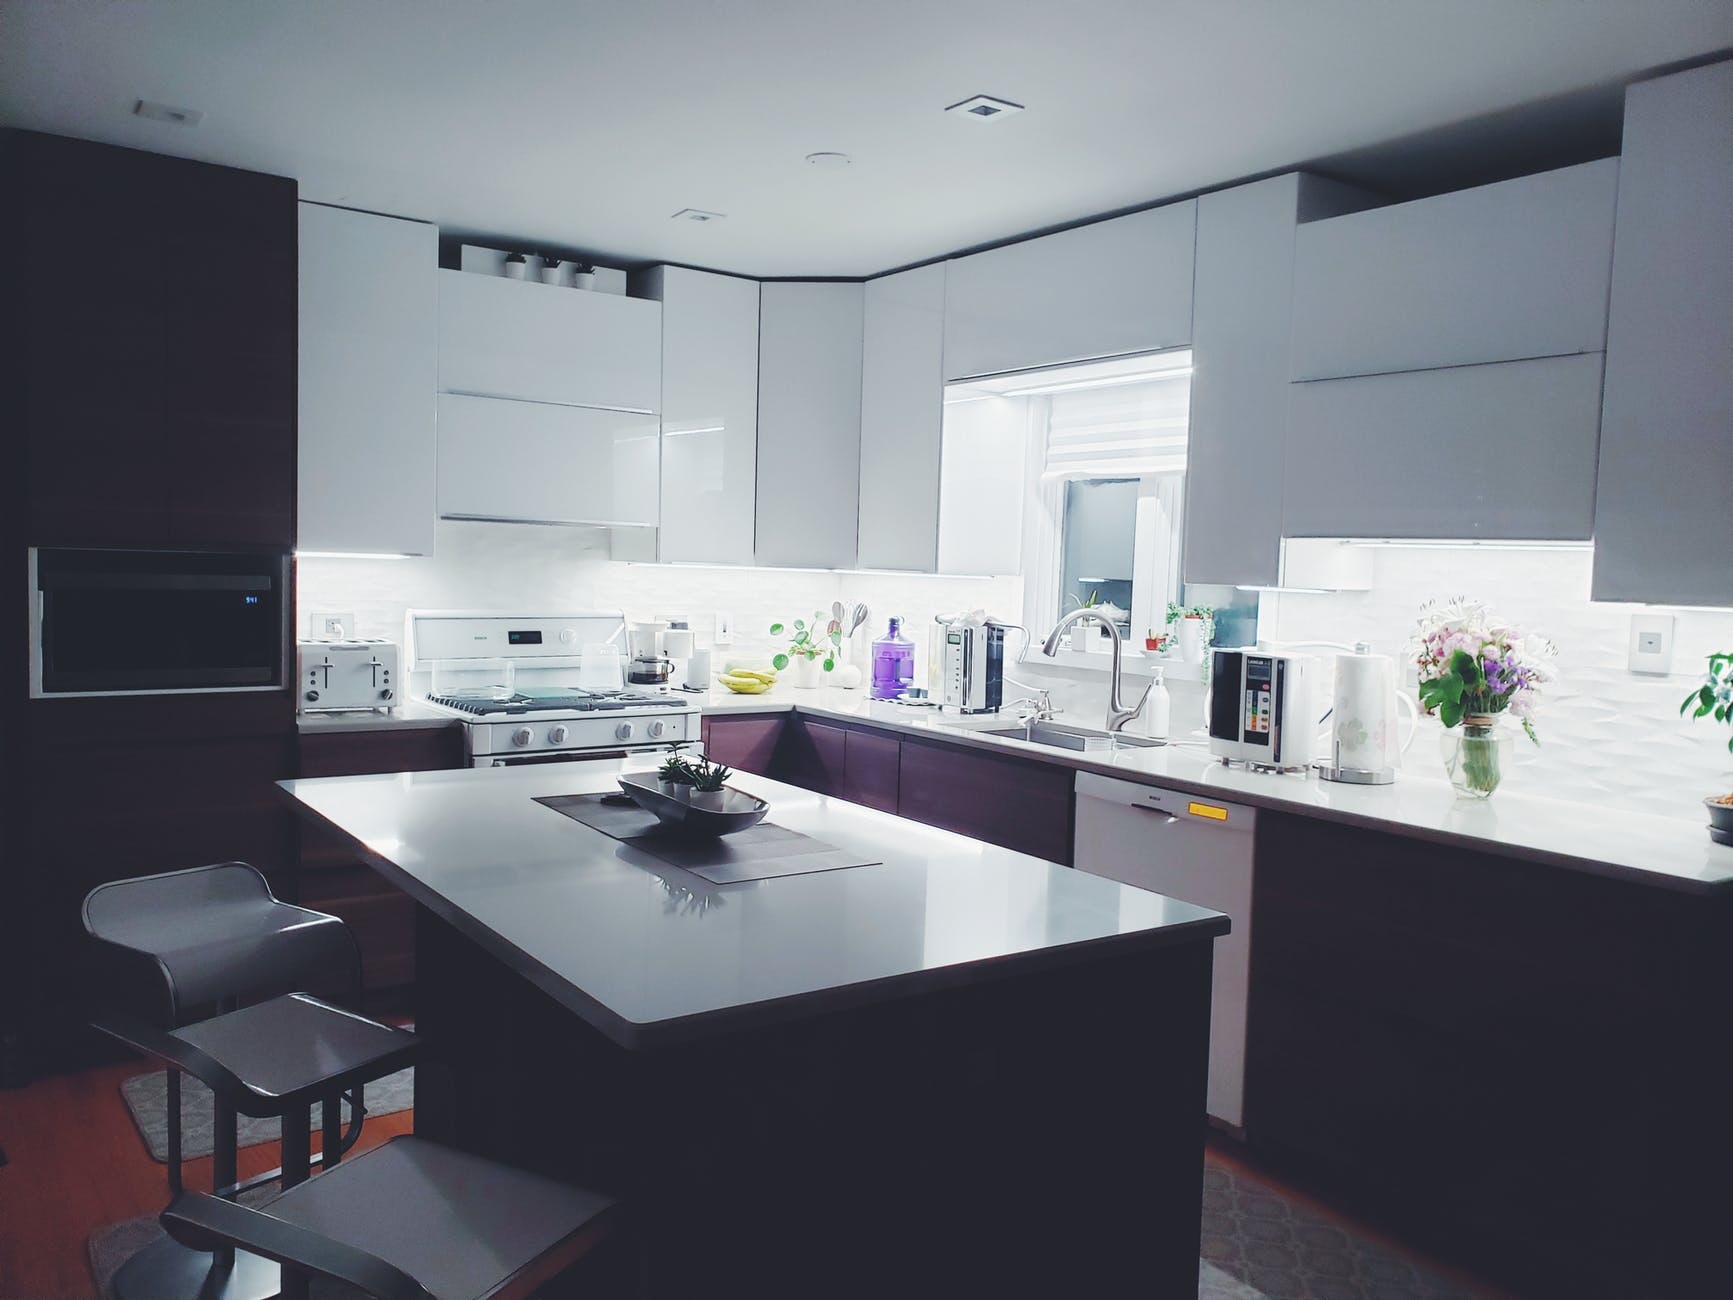 https://www.simplelighting.co.uk/blog/wp-content/uploads/2020/07/kitchen-with-under-cabinet-lighting.jpg